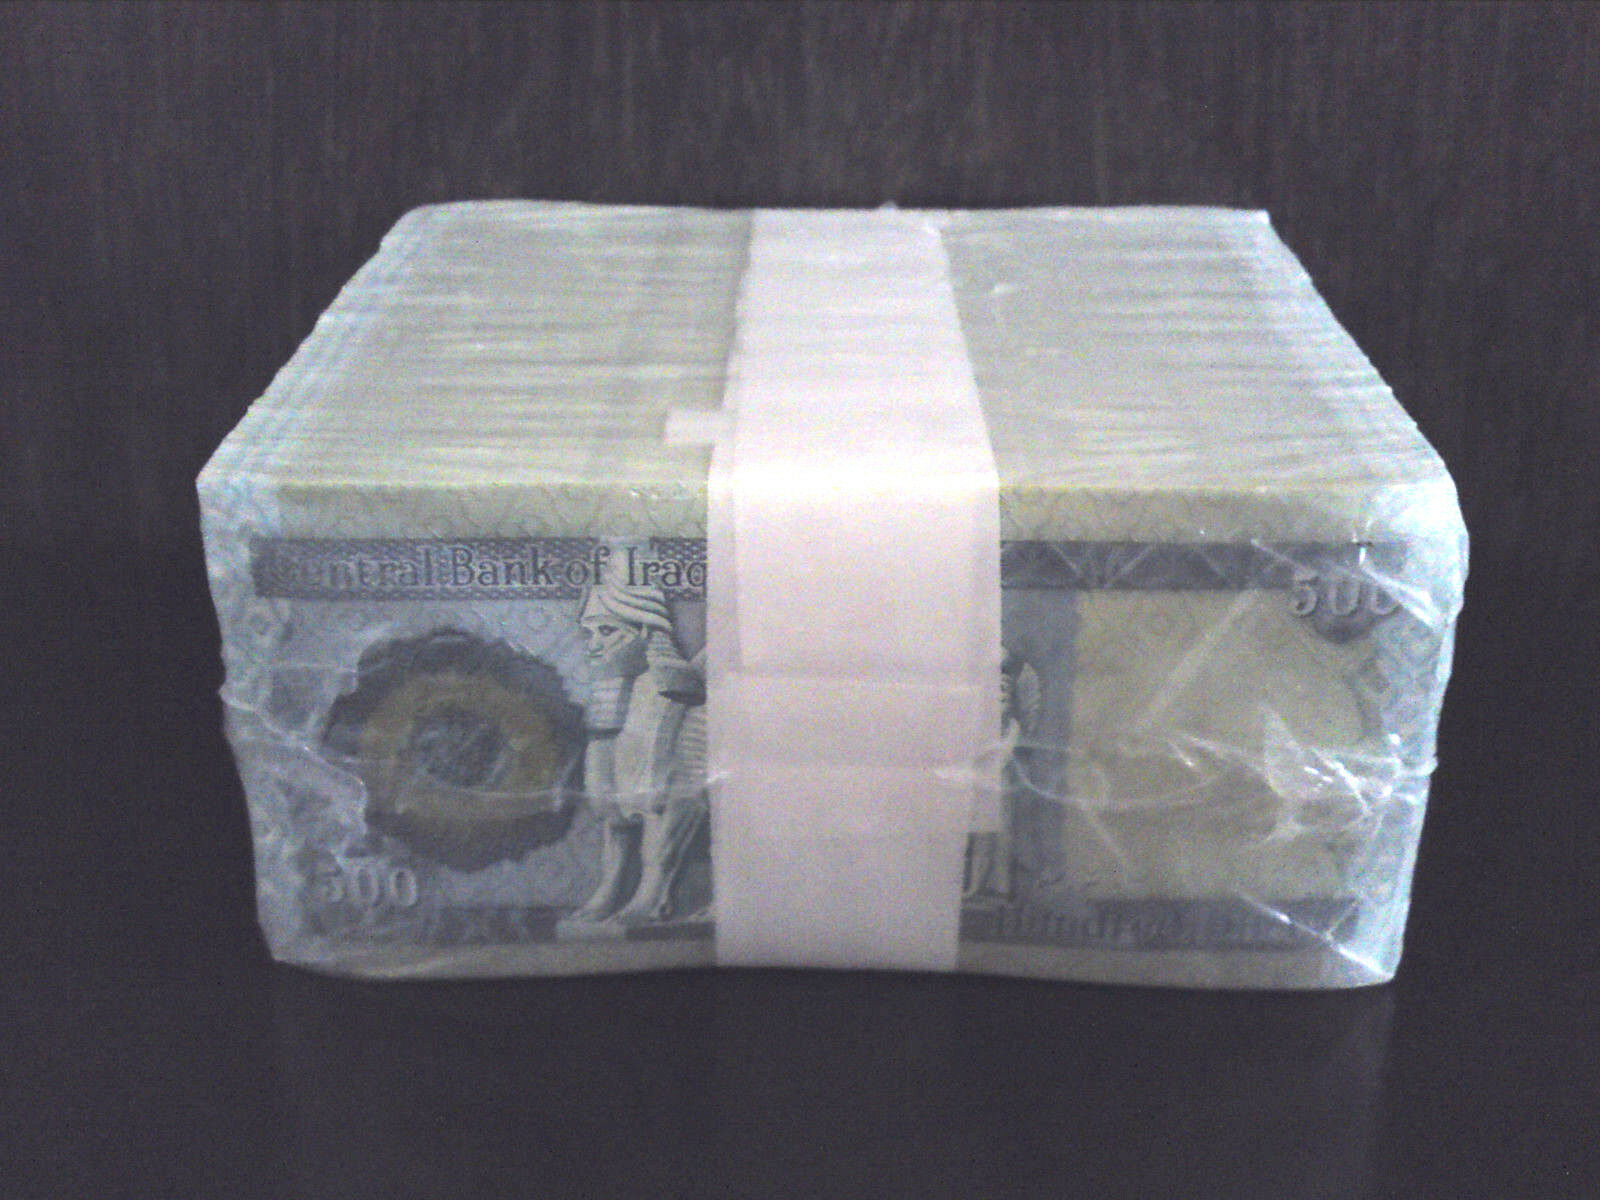 5000 Iraqi Dinar  10 X 500 Dinar Notes  5,000 Total Iraq Money